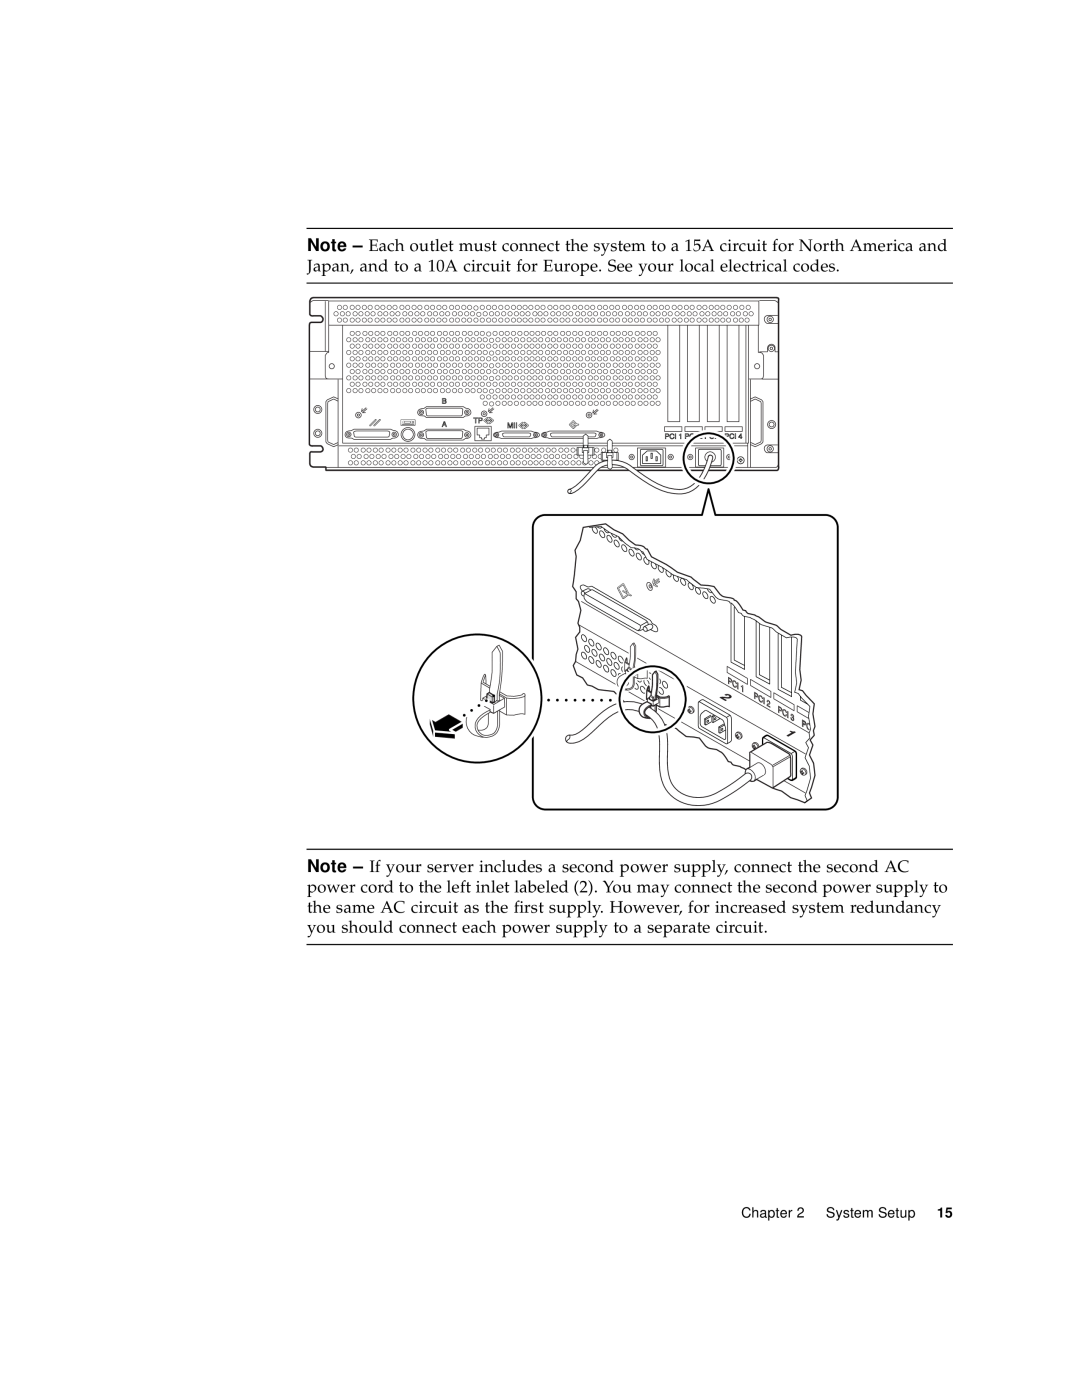 Sun Microsystems 220R manual 